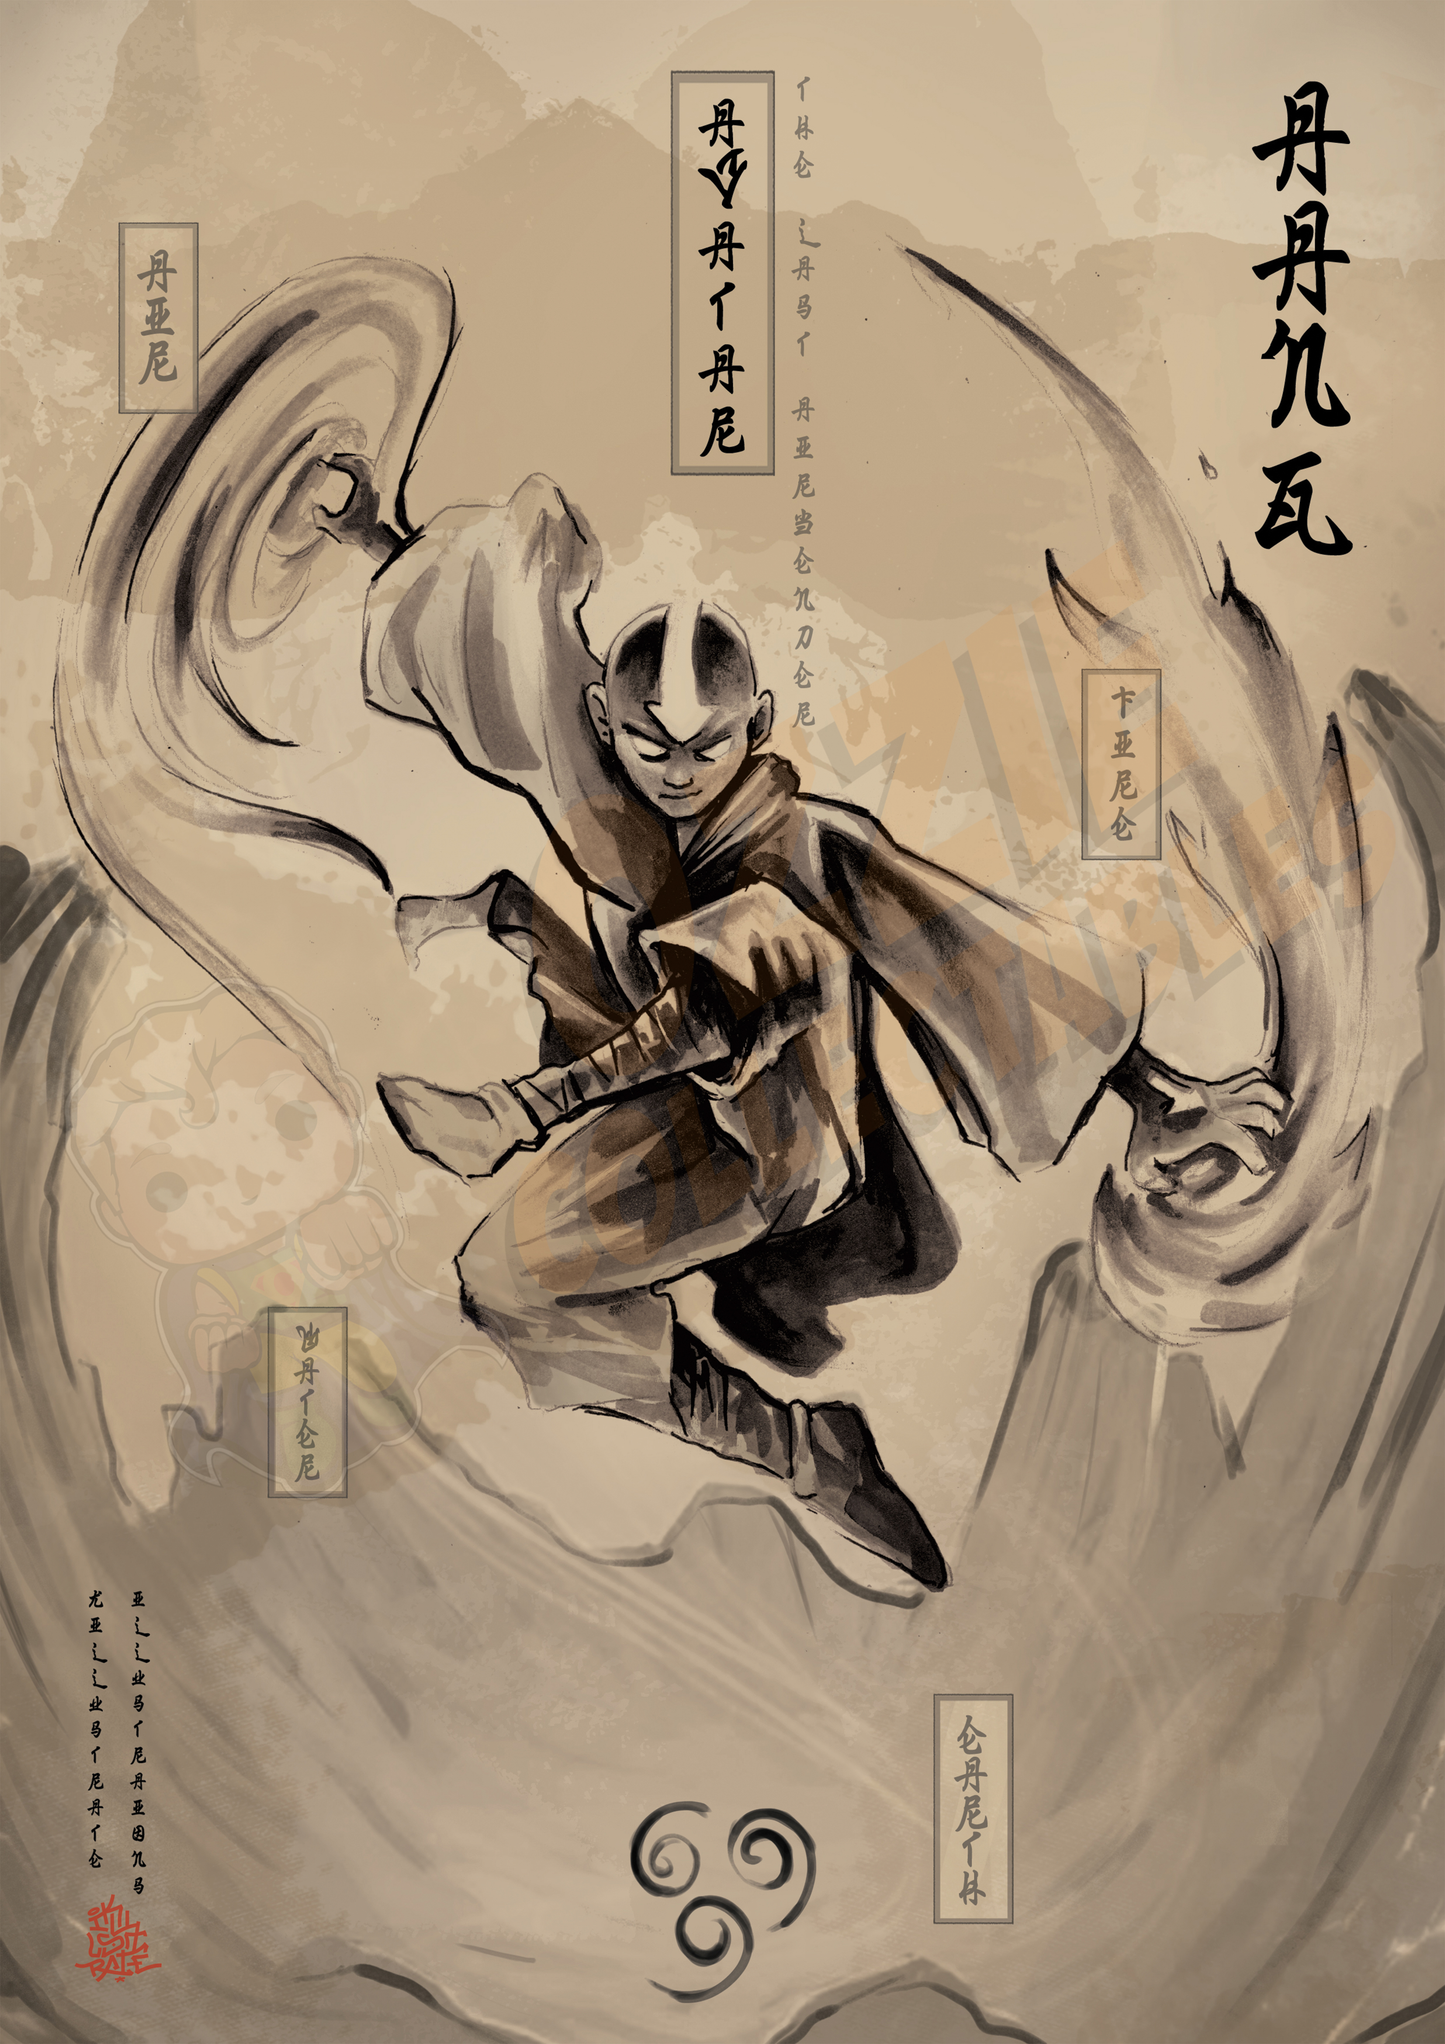 Avatar The Last Airbender - Aang - Killustrate Killigraphy Series Art Print Poster